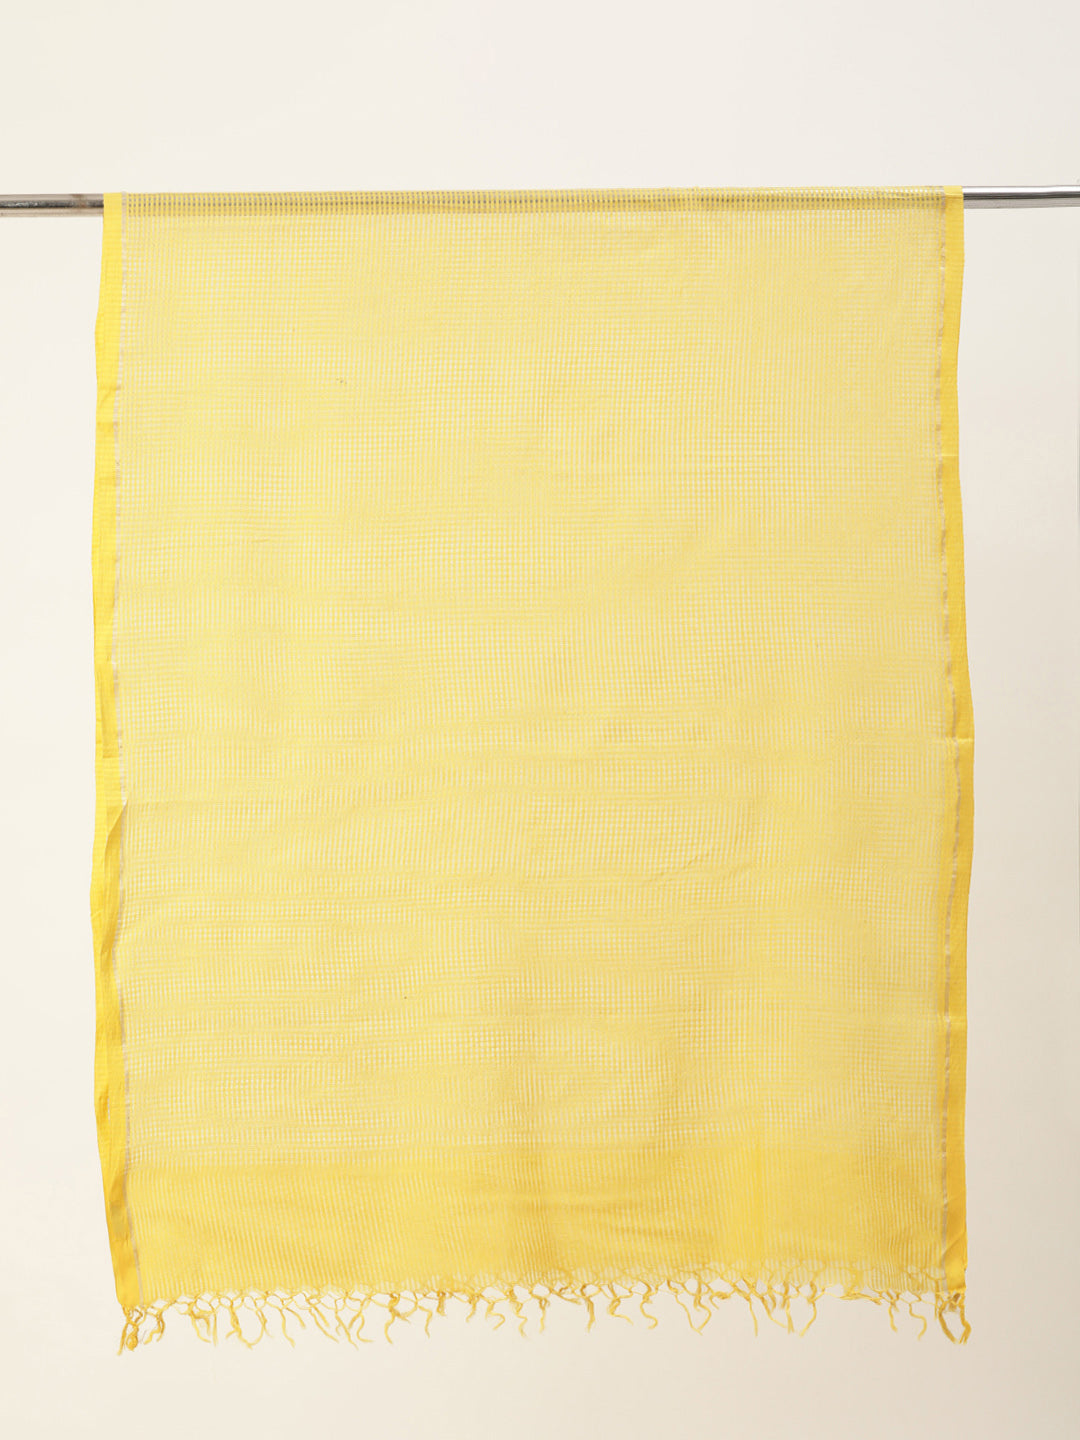 Yellow Handwoven Checked Silk Cotton Dupatta